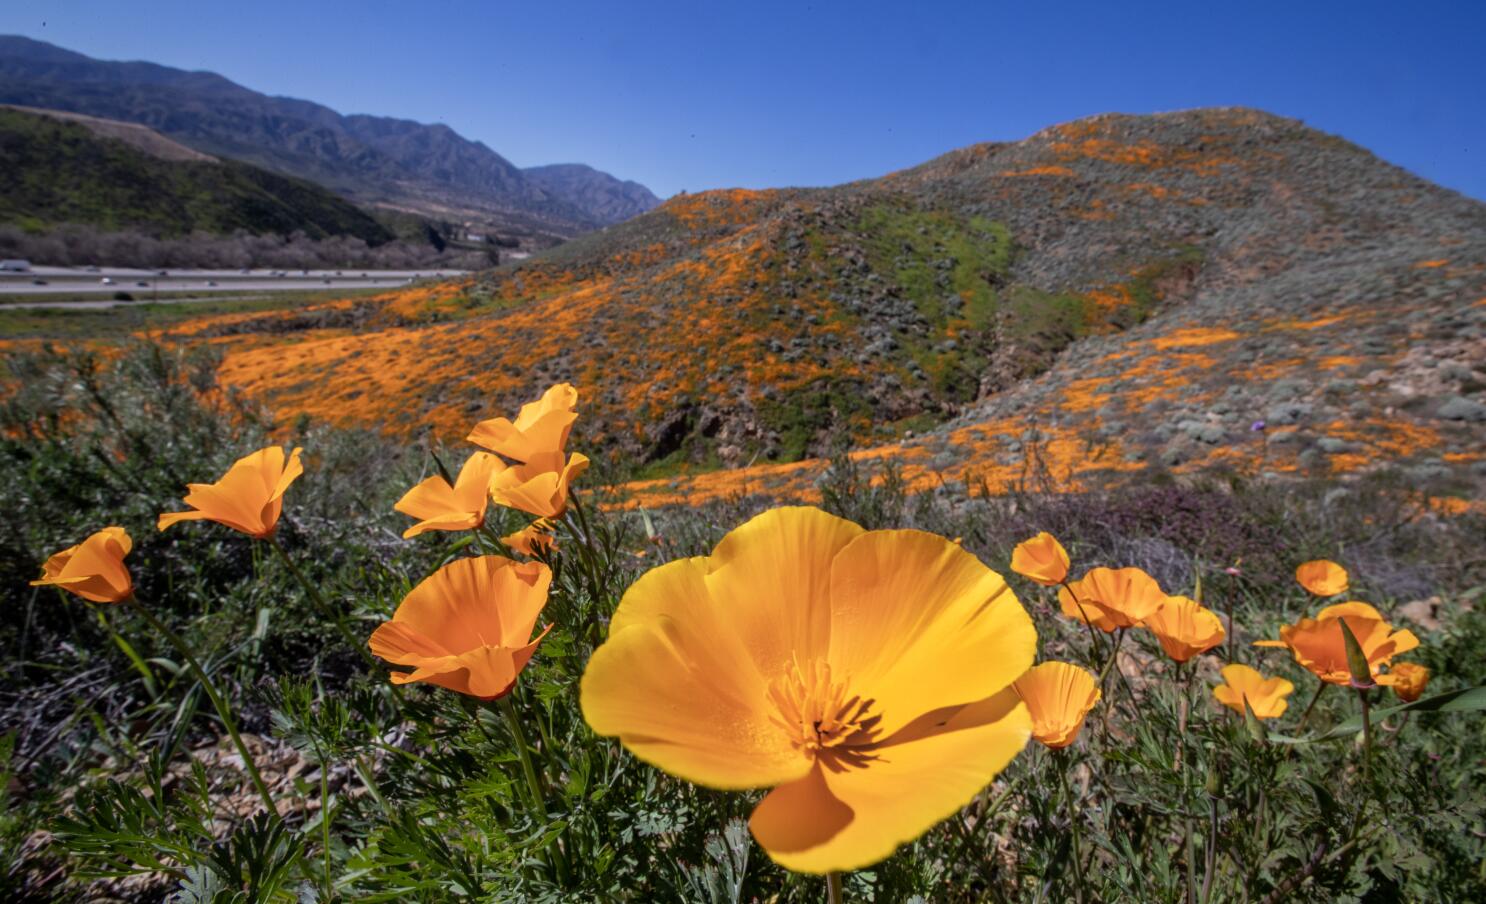 Historic superbloom brings vibrant colors to California's desert